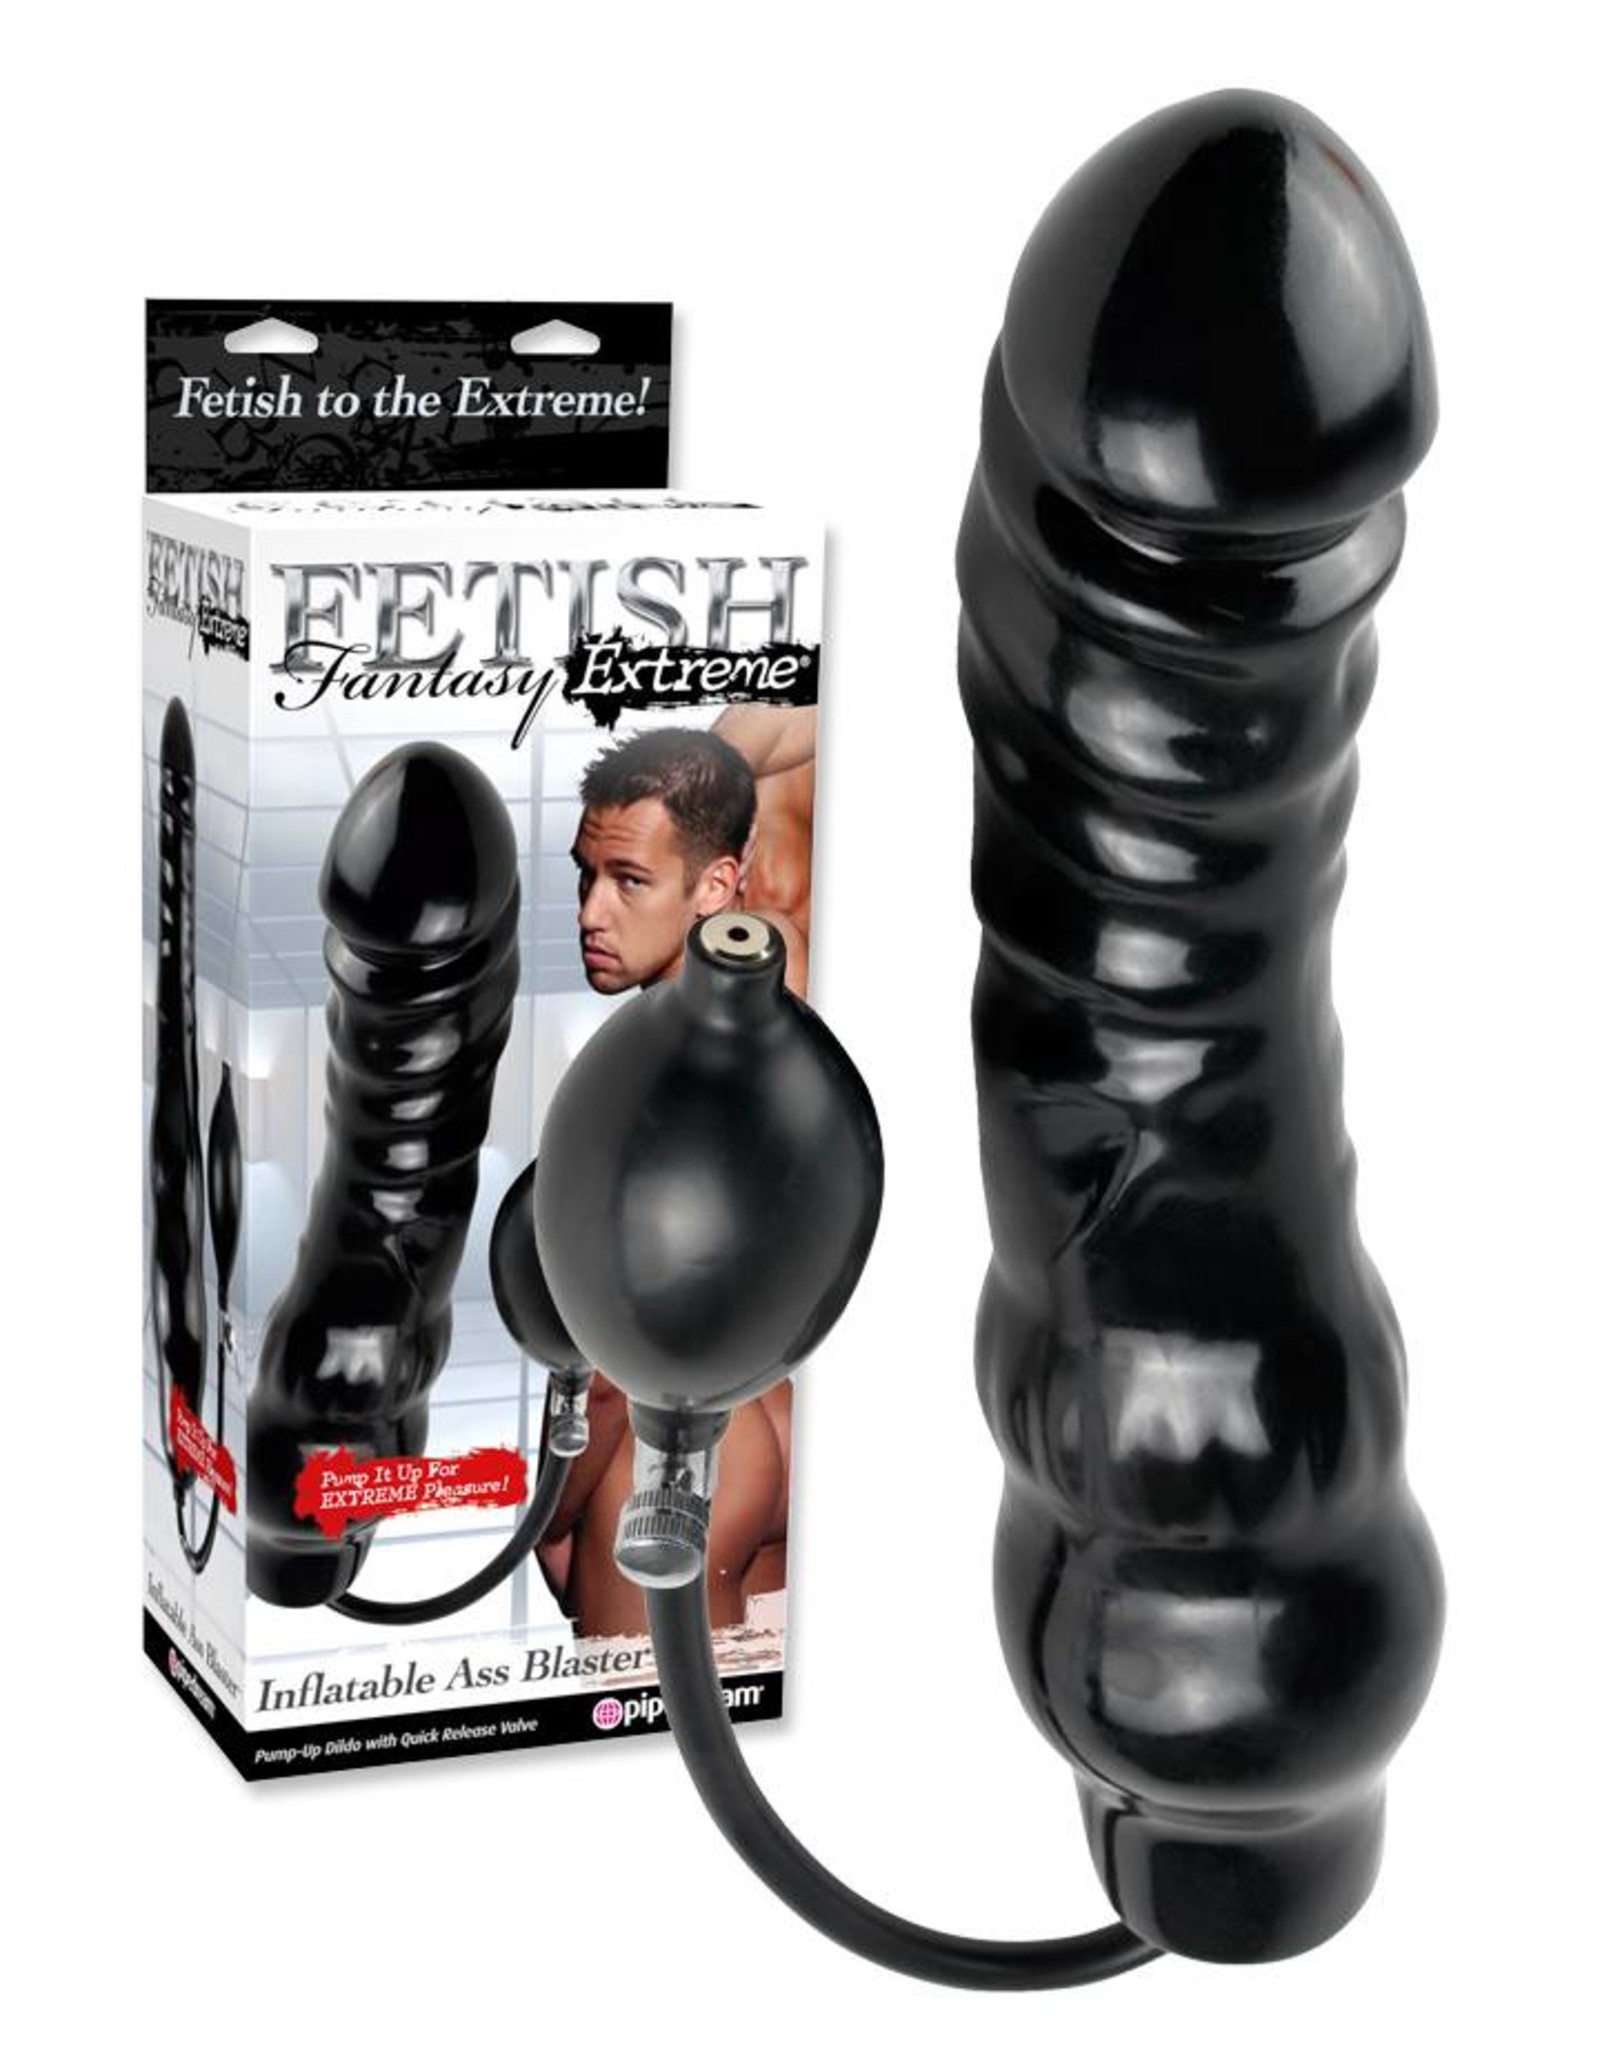 Fetish Fantasy Series Fetish Fantasy Extreme Inflatable Ass Blaster